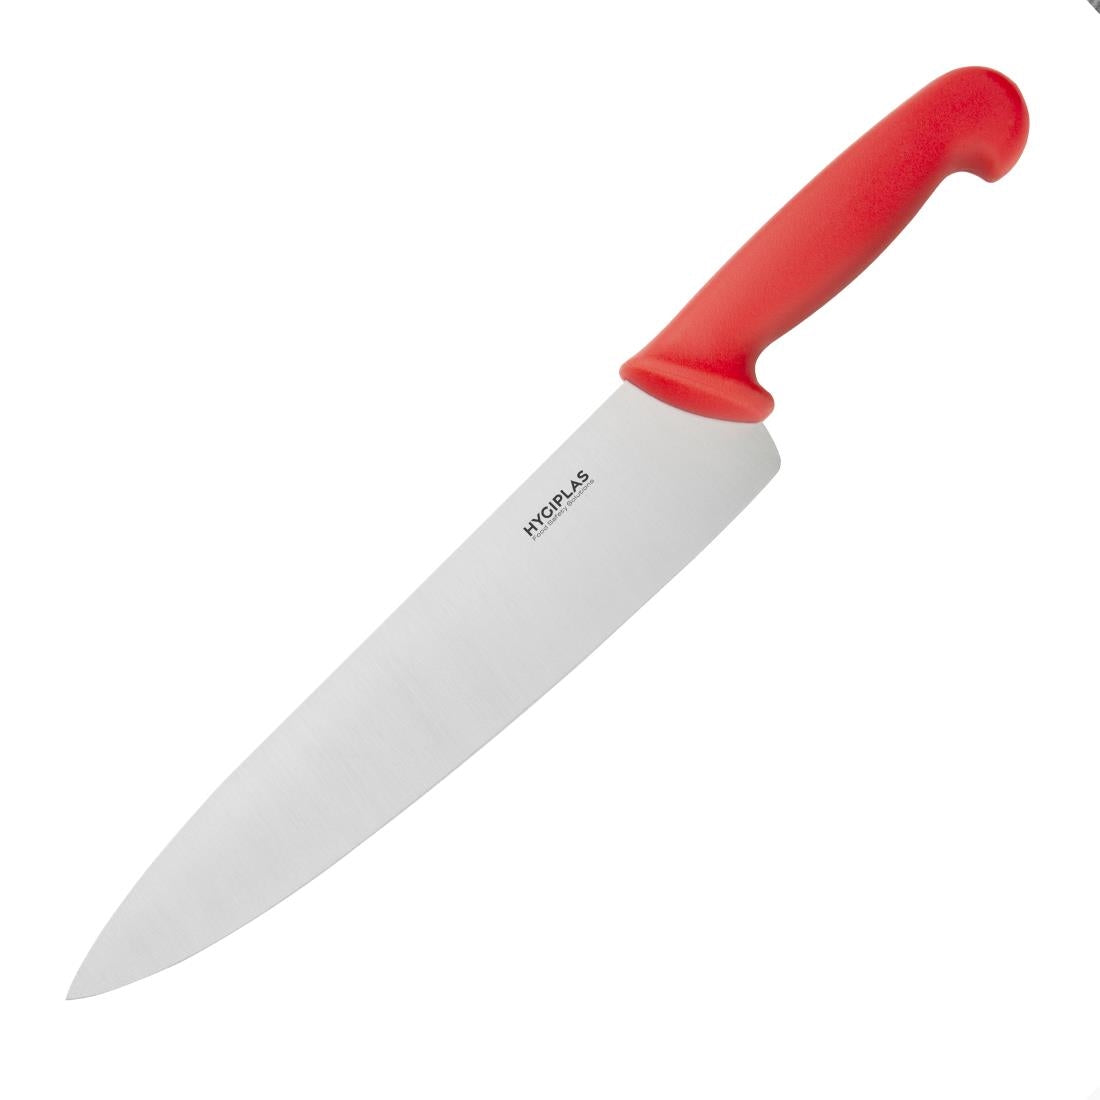 C886 Hygiplas Chefs Knife Red 25.5cm JD Catering Equipment Solutions Ltd